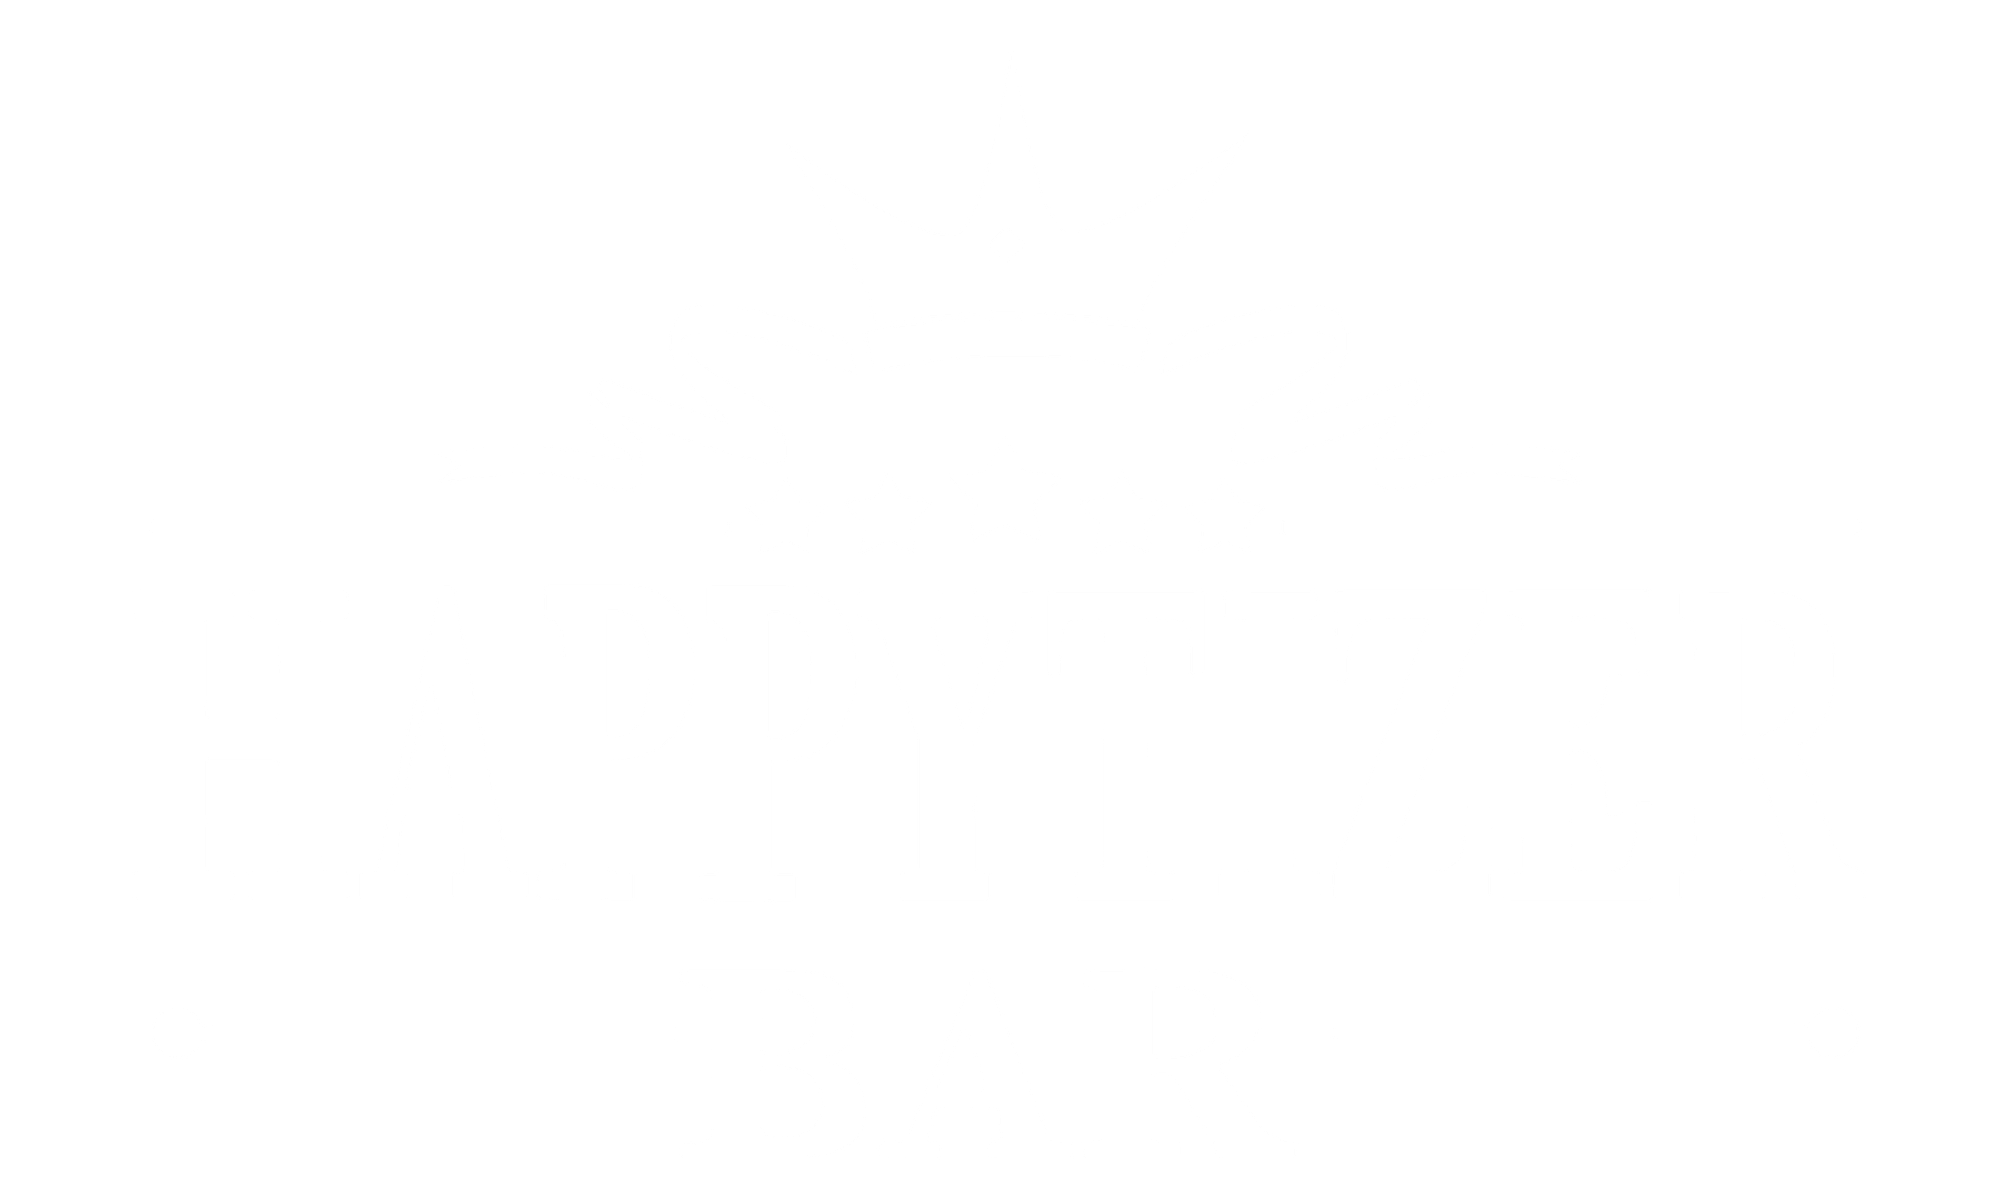 happytizer_bar_logo2w